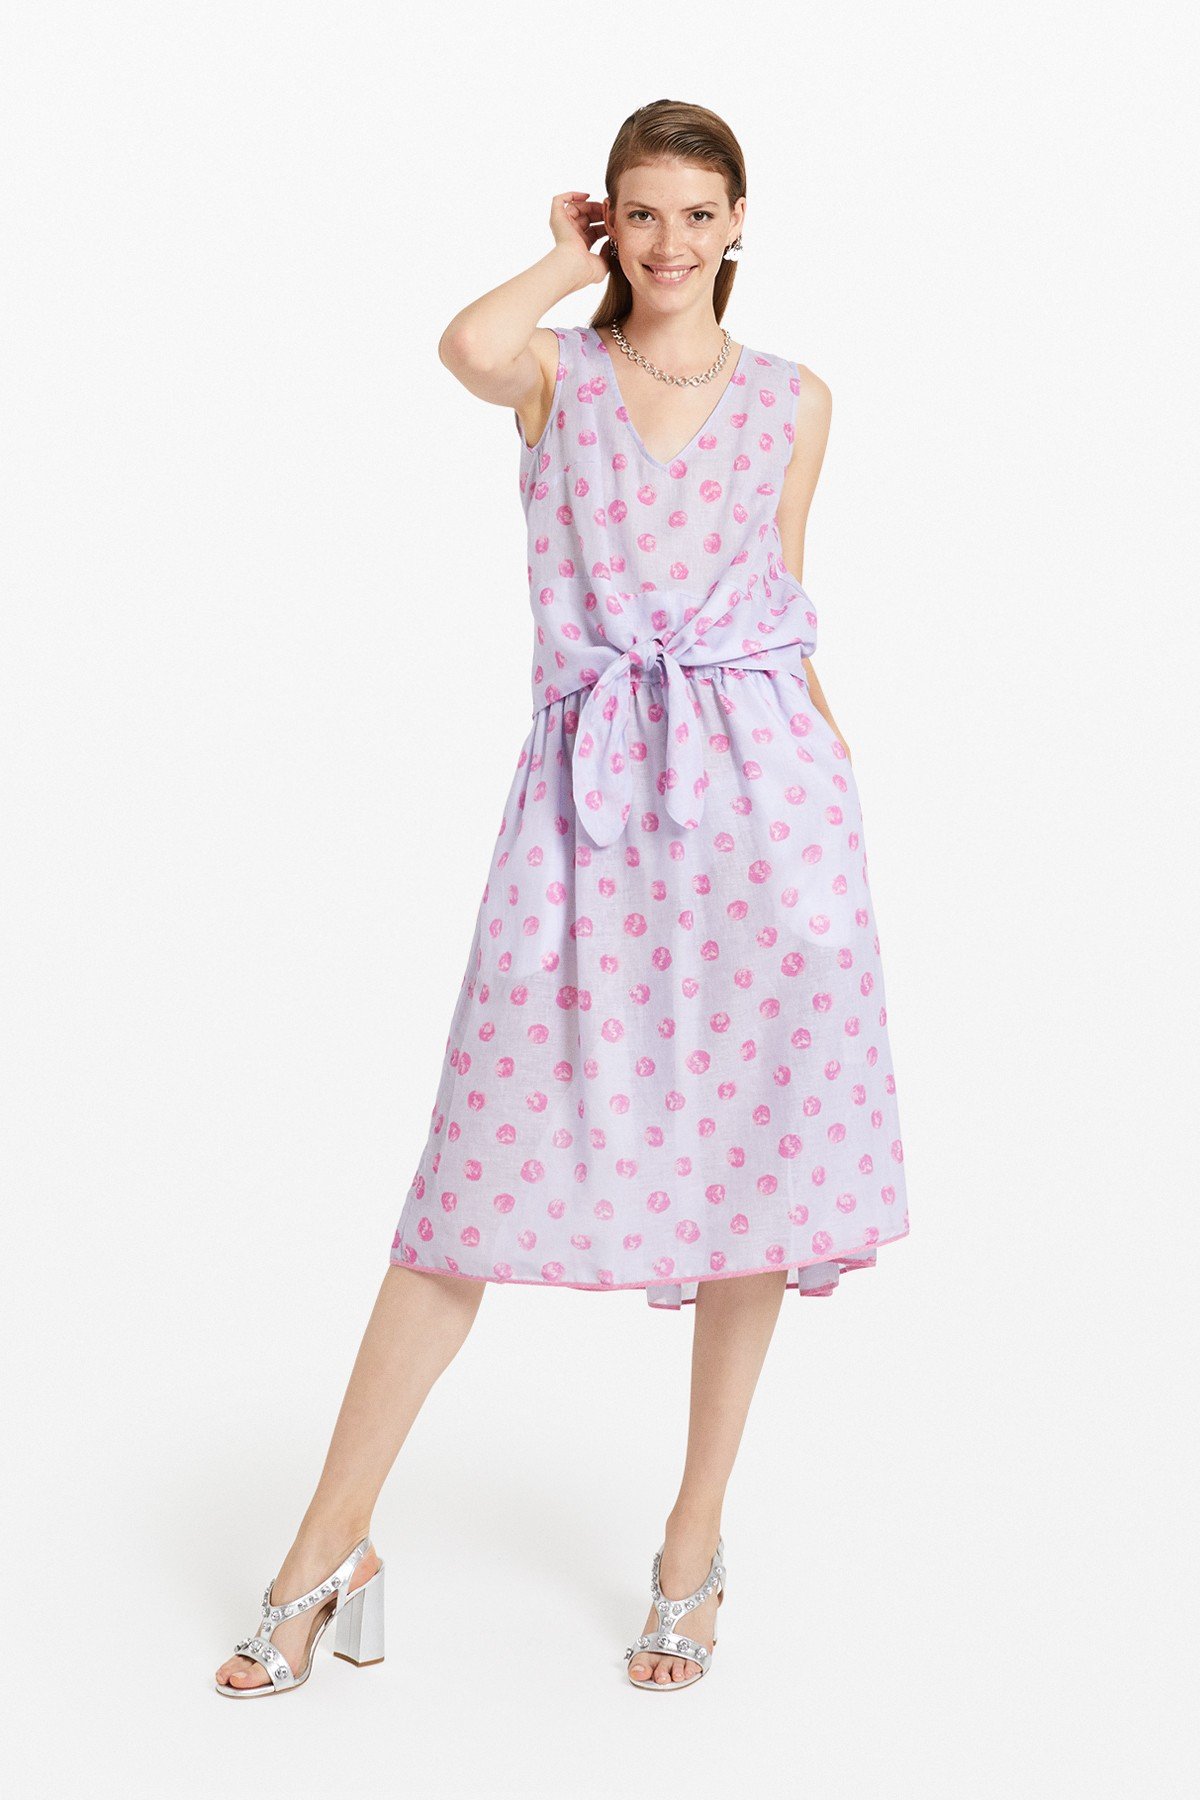 Midi skirt with polka dots' print